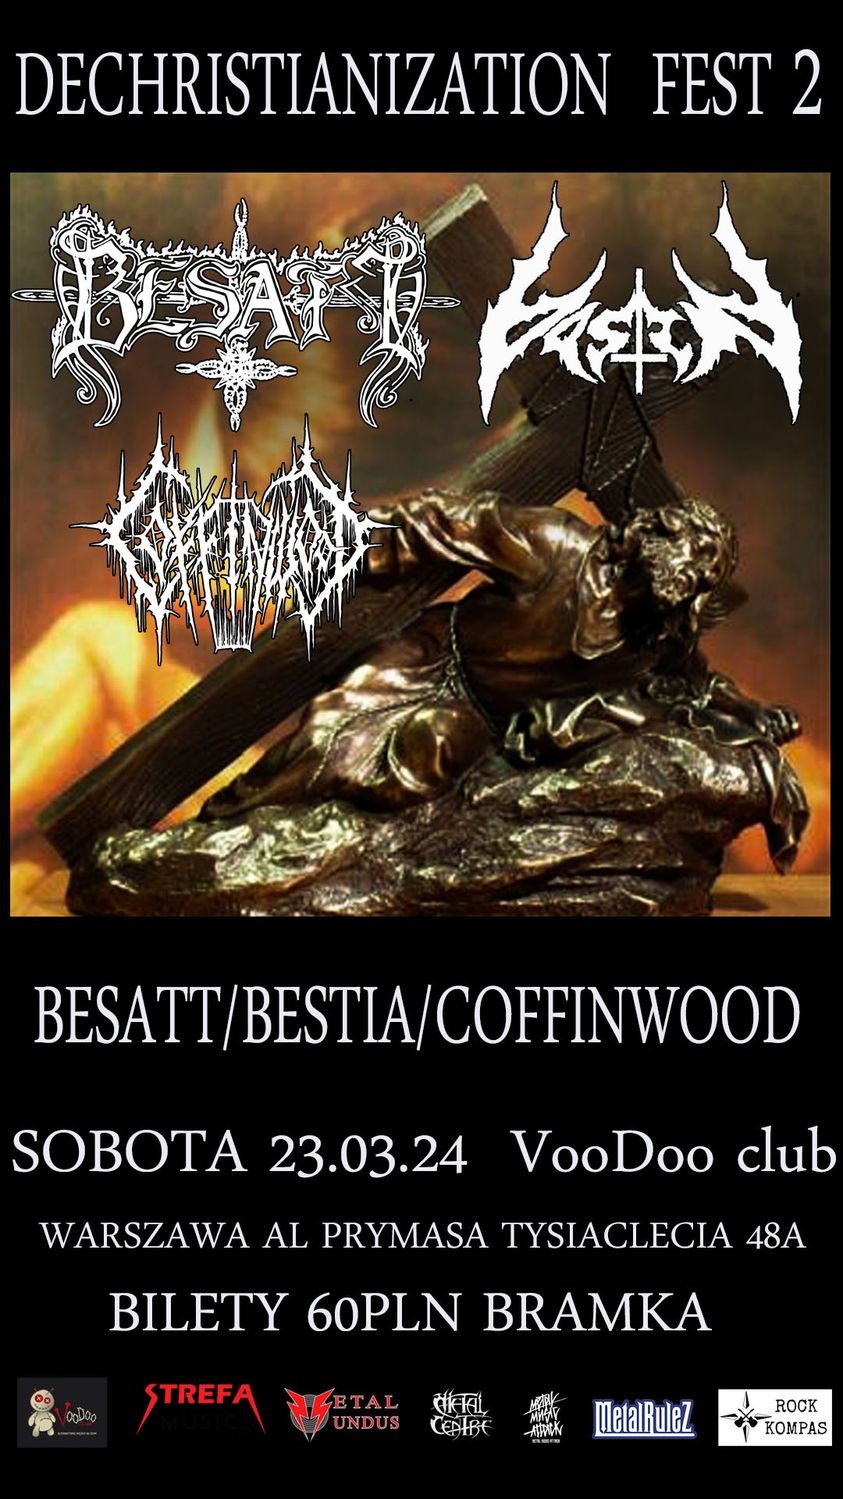 Dechristianization Fest 2 - BESATT + BESTIA + COFFINWOOD